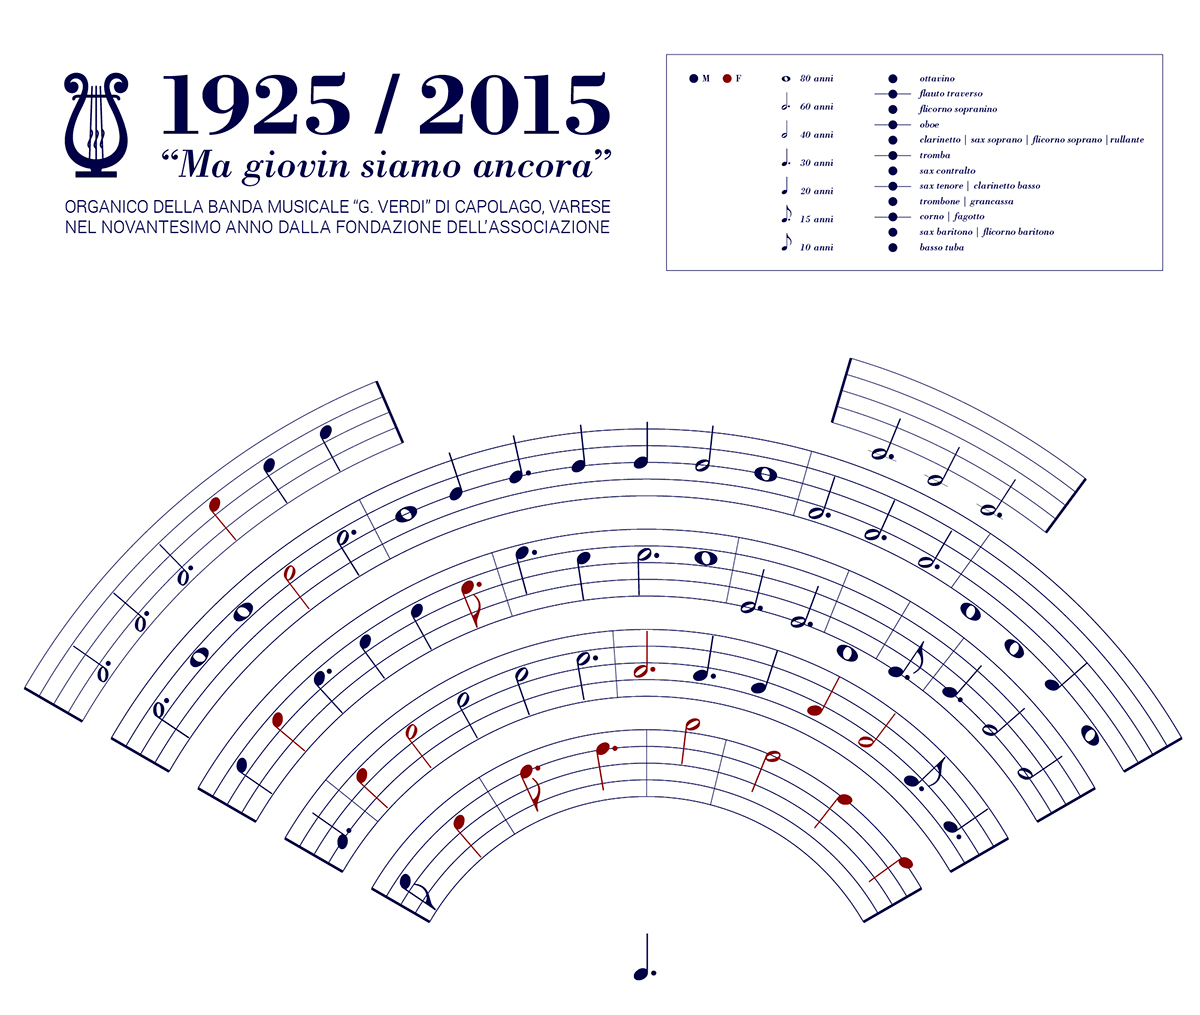 infographic data visualization marching band Pentagram ninety years